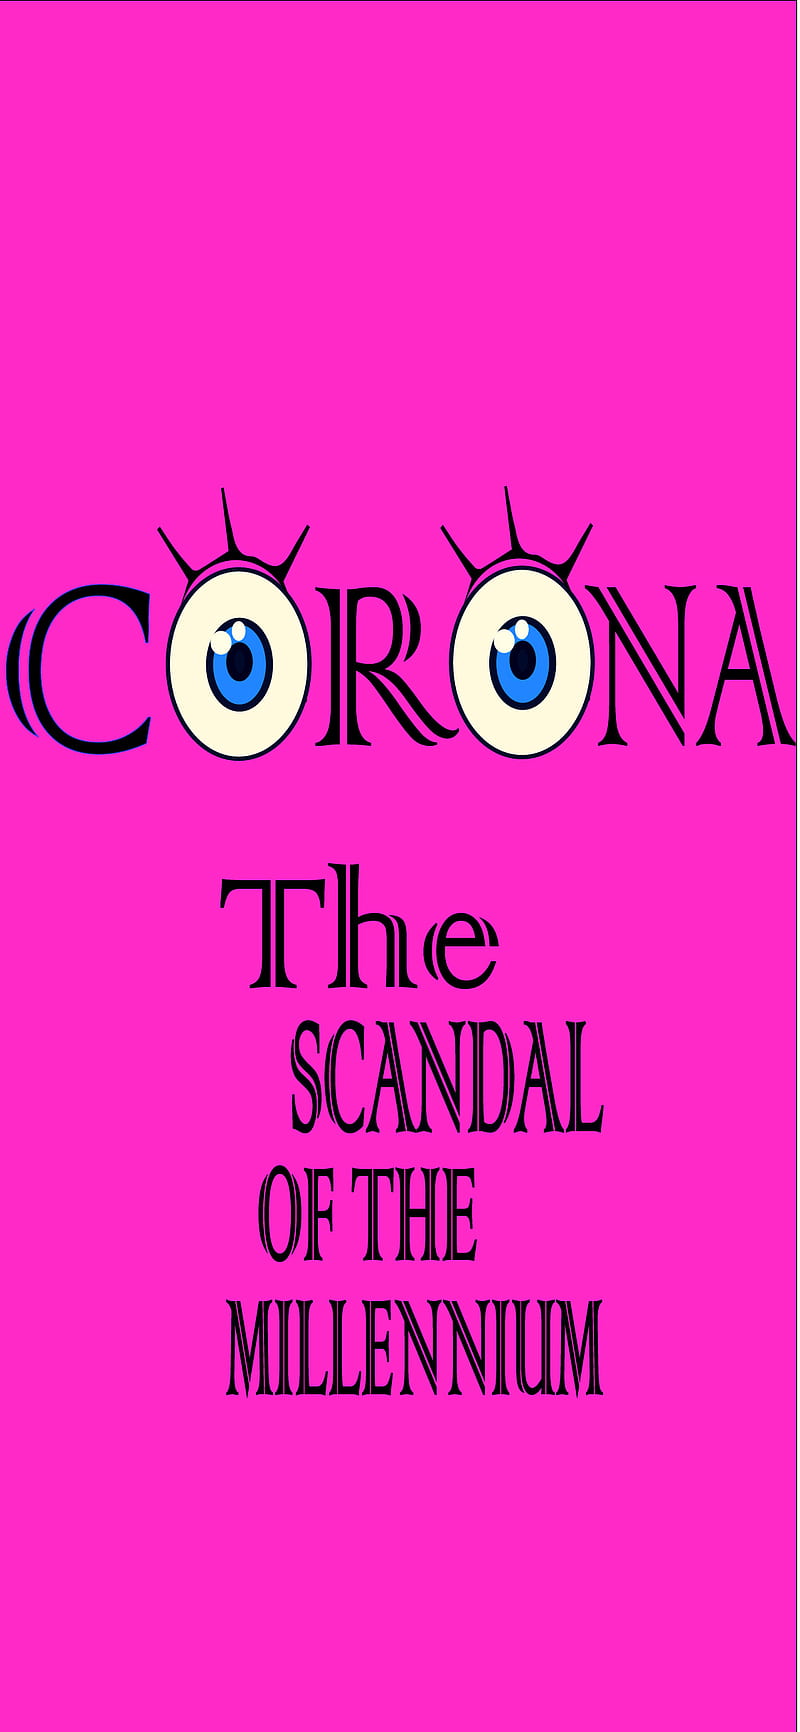 Corona Army Bts Cartoon Eye Fortnite Iphone Pink Samsung Scandal Hd Mobile Wallpaper Peakpx